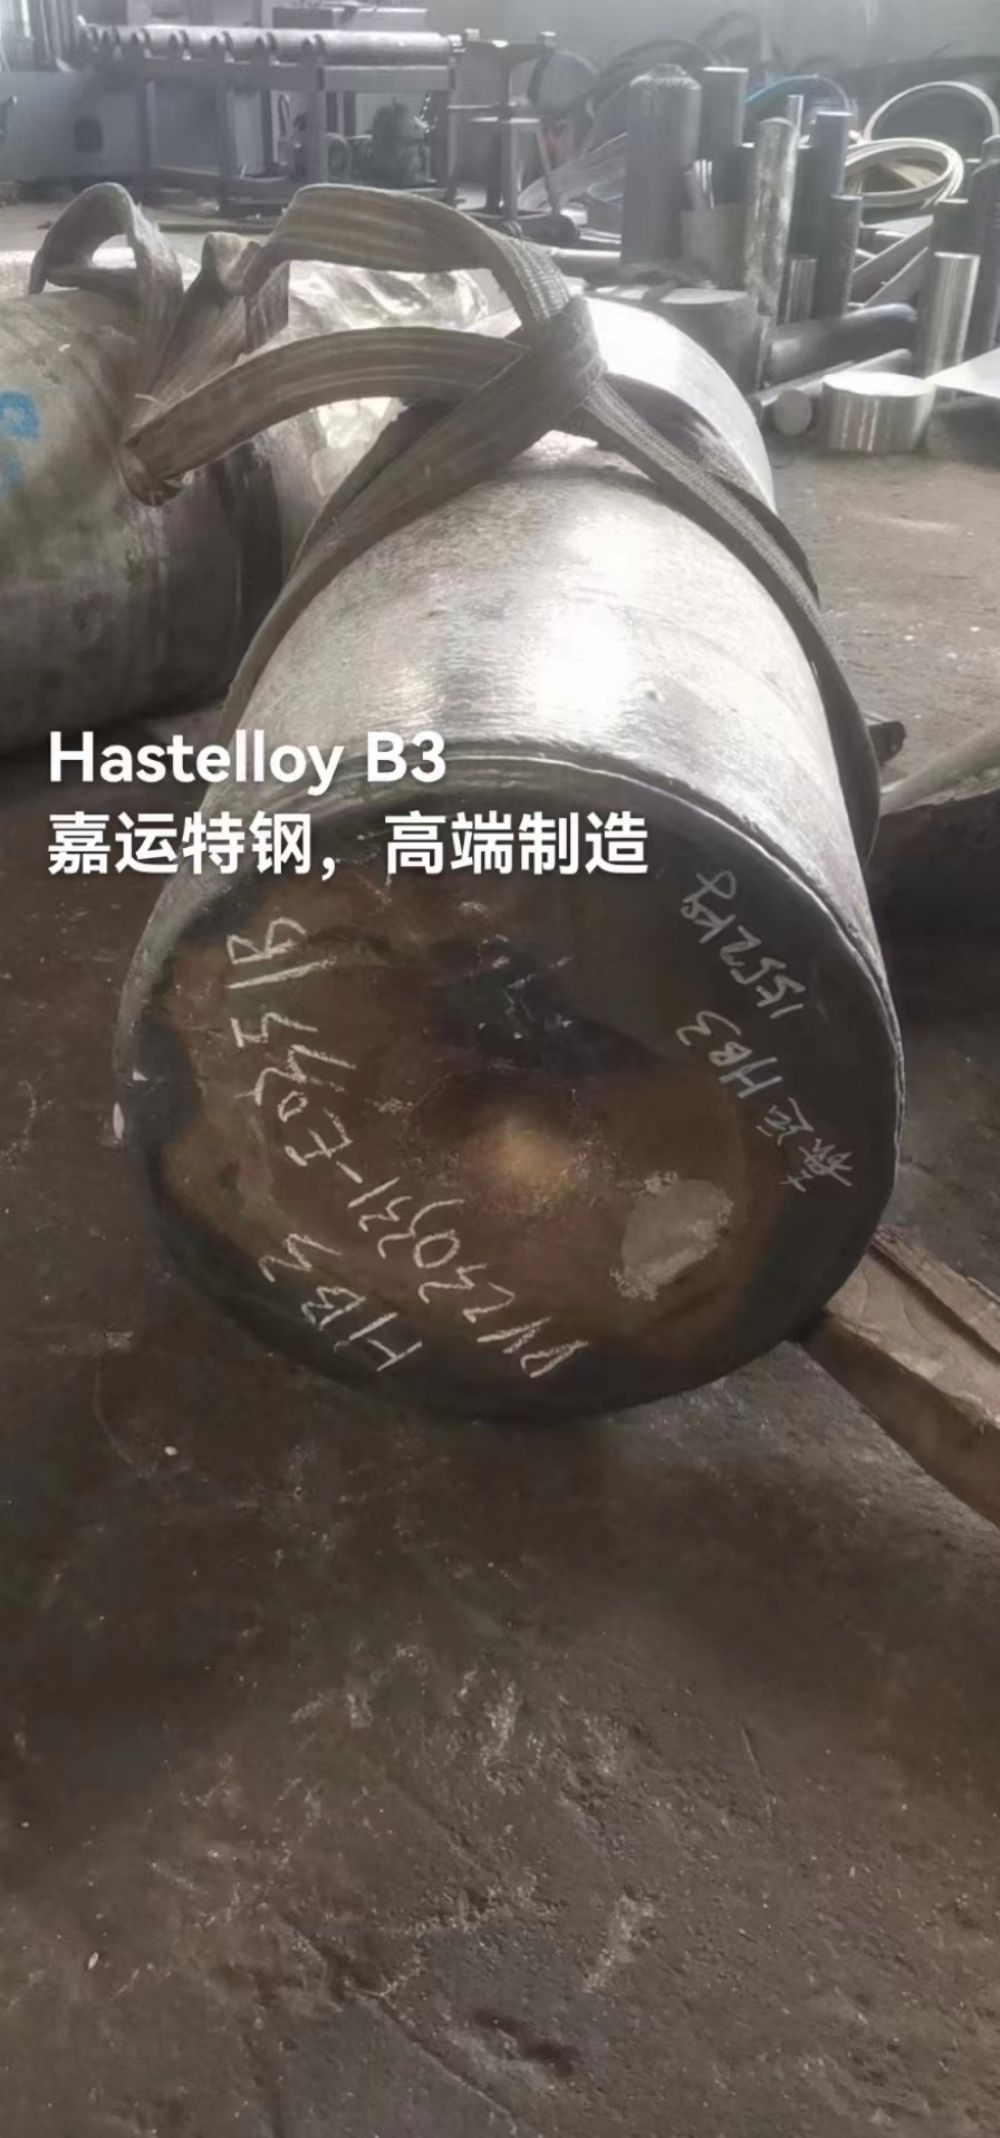 Hastelloy B3 šipke